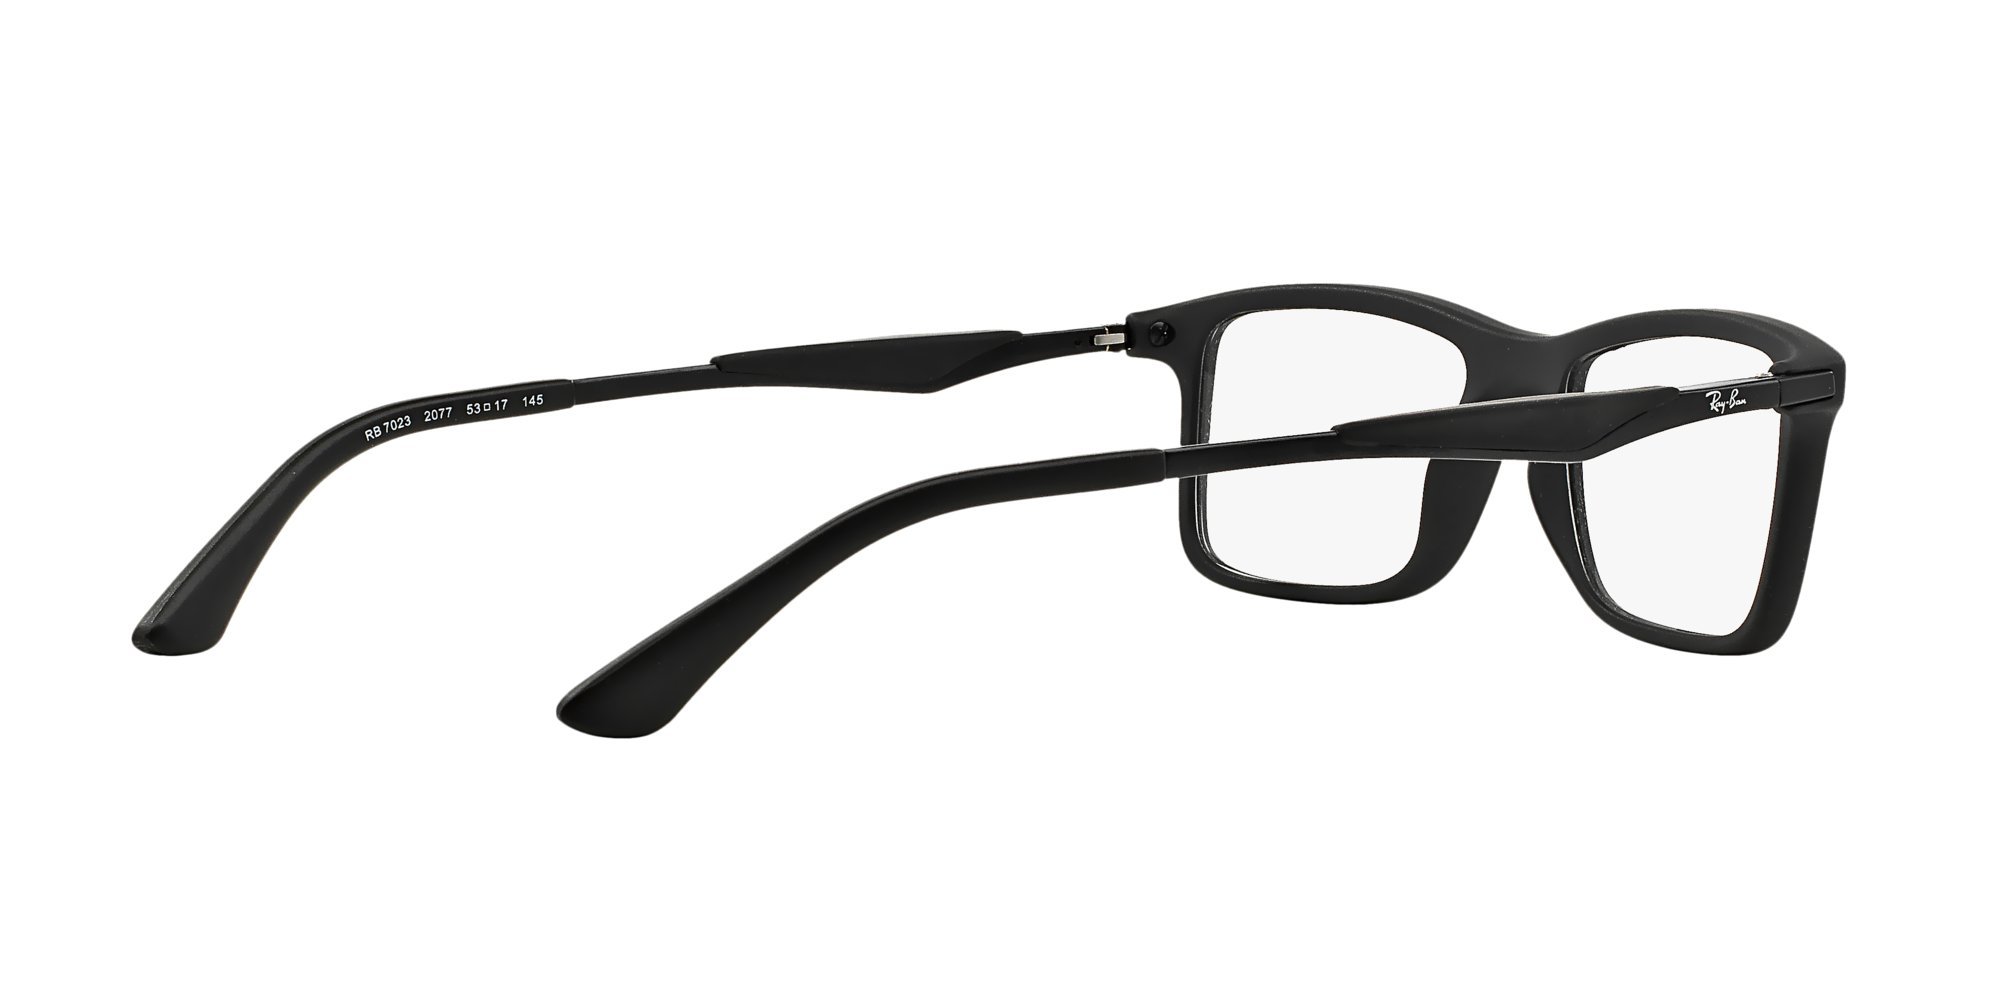 Ray-Ban Liteforce RB7023 - 2077 Eyeglasses Matte Black 55mm